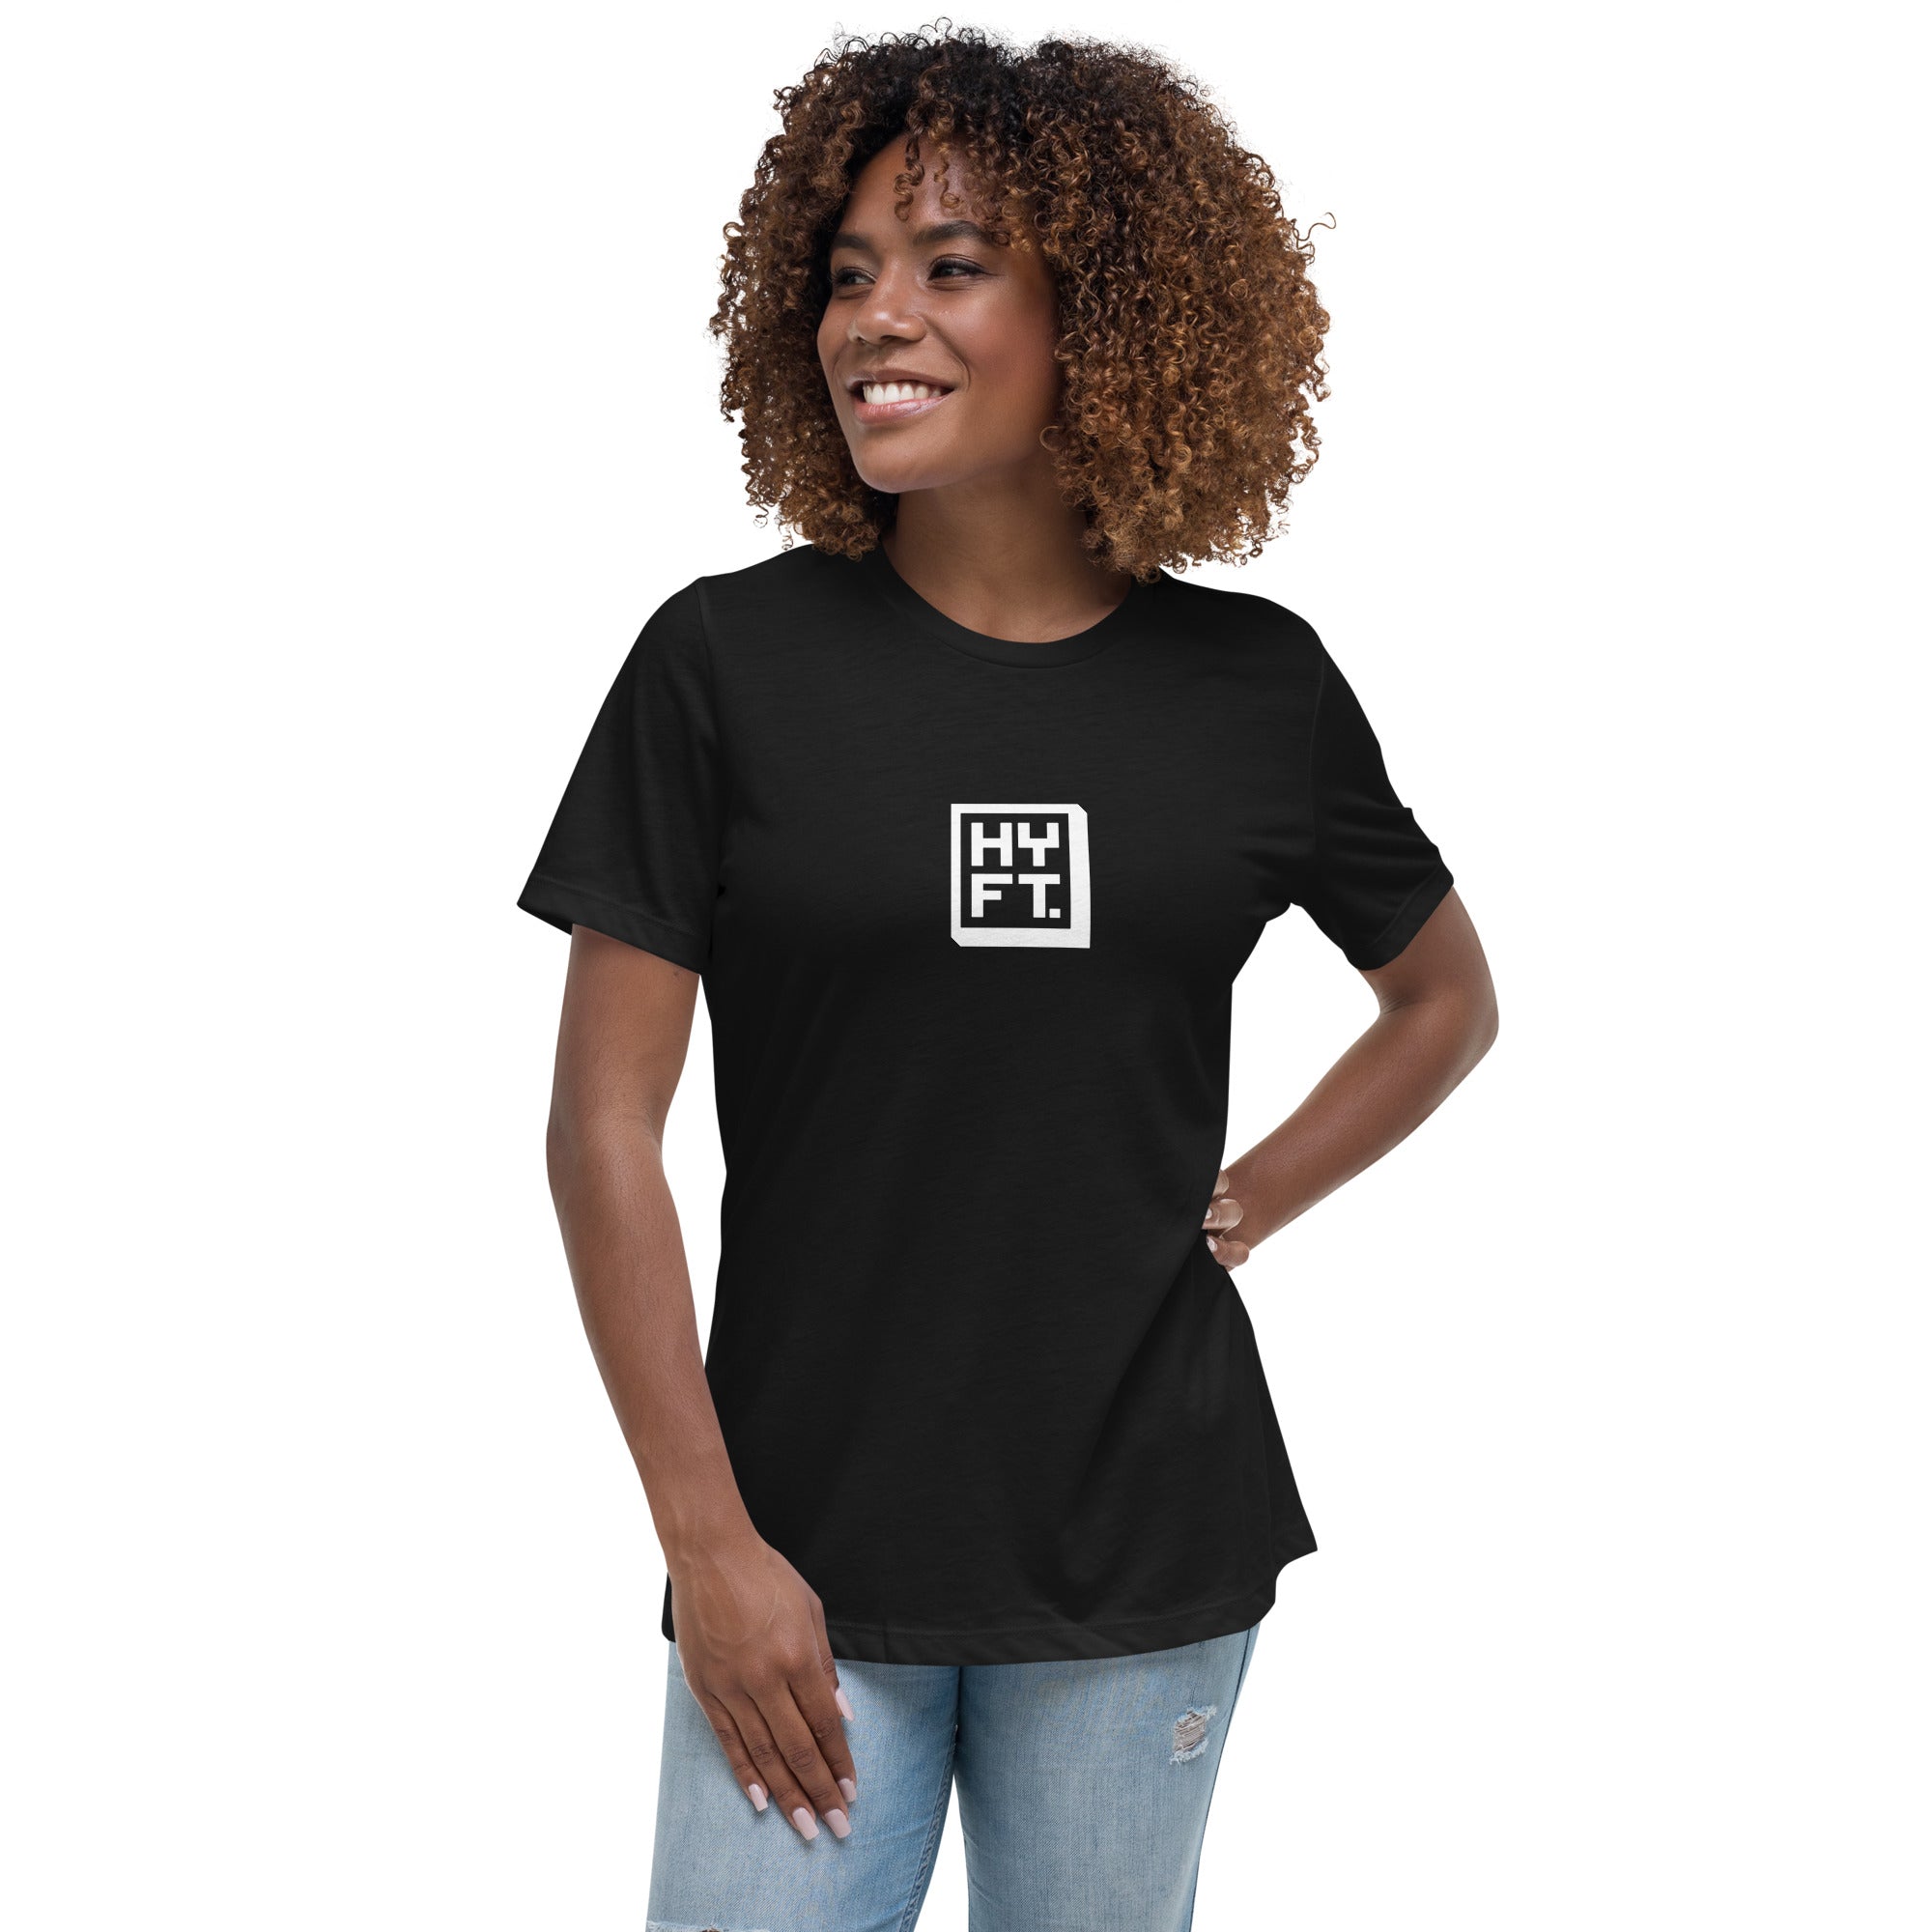 Hoye Fit Boxed Logo - Dark Shirts with White Print